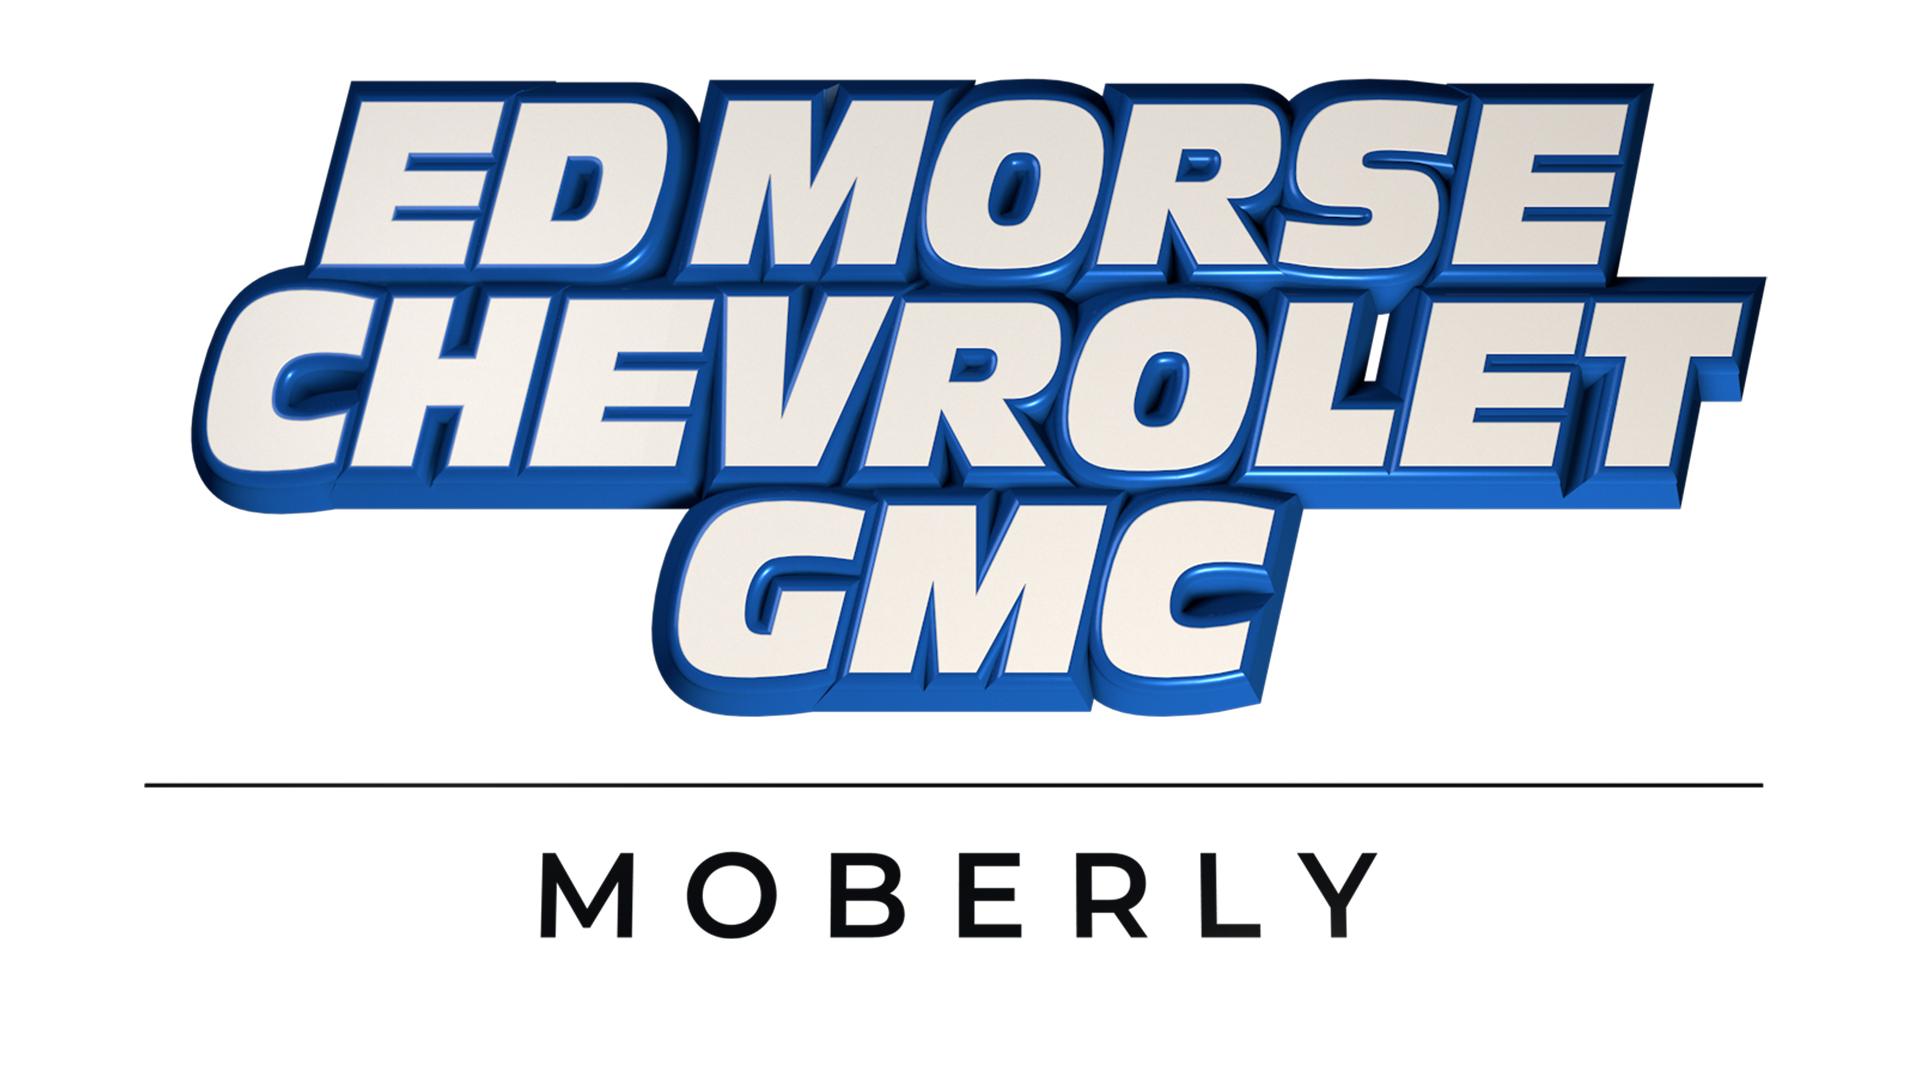 Ed Morse Chevrolet GMC Moberly